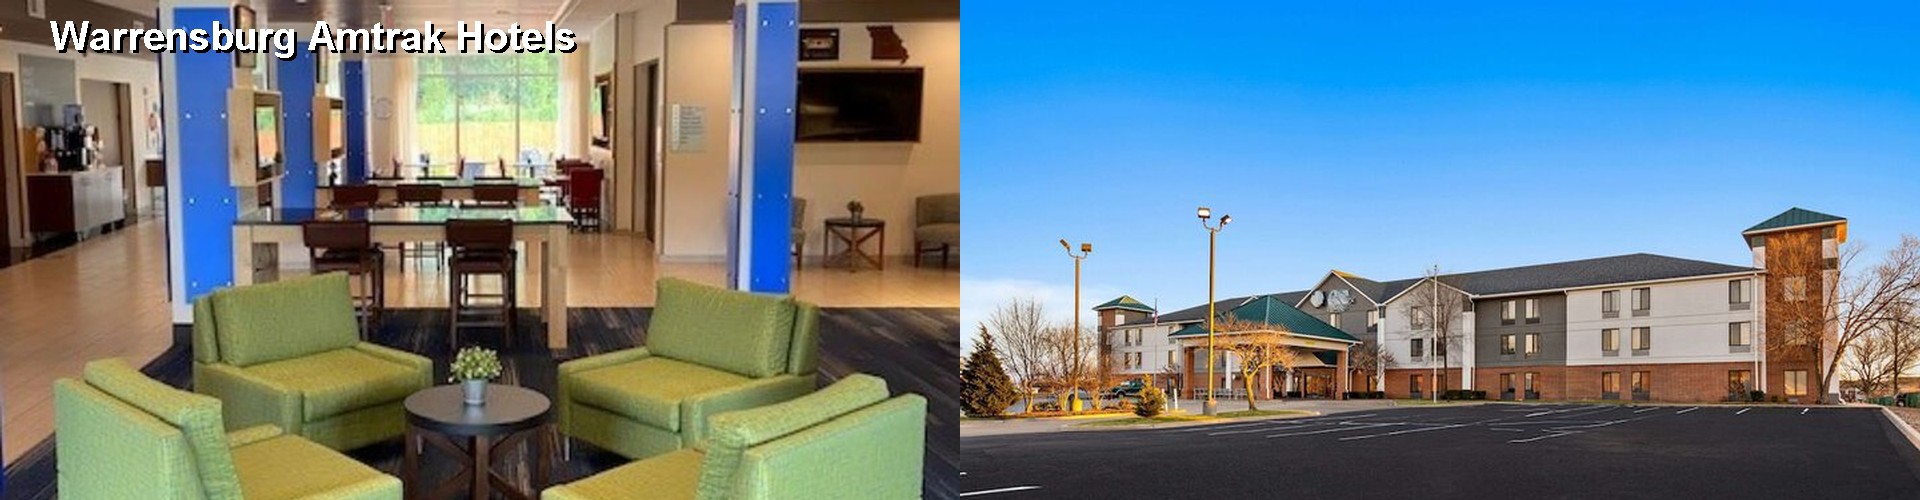 5 Best Hotels near Warrensburg Amtrak